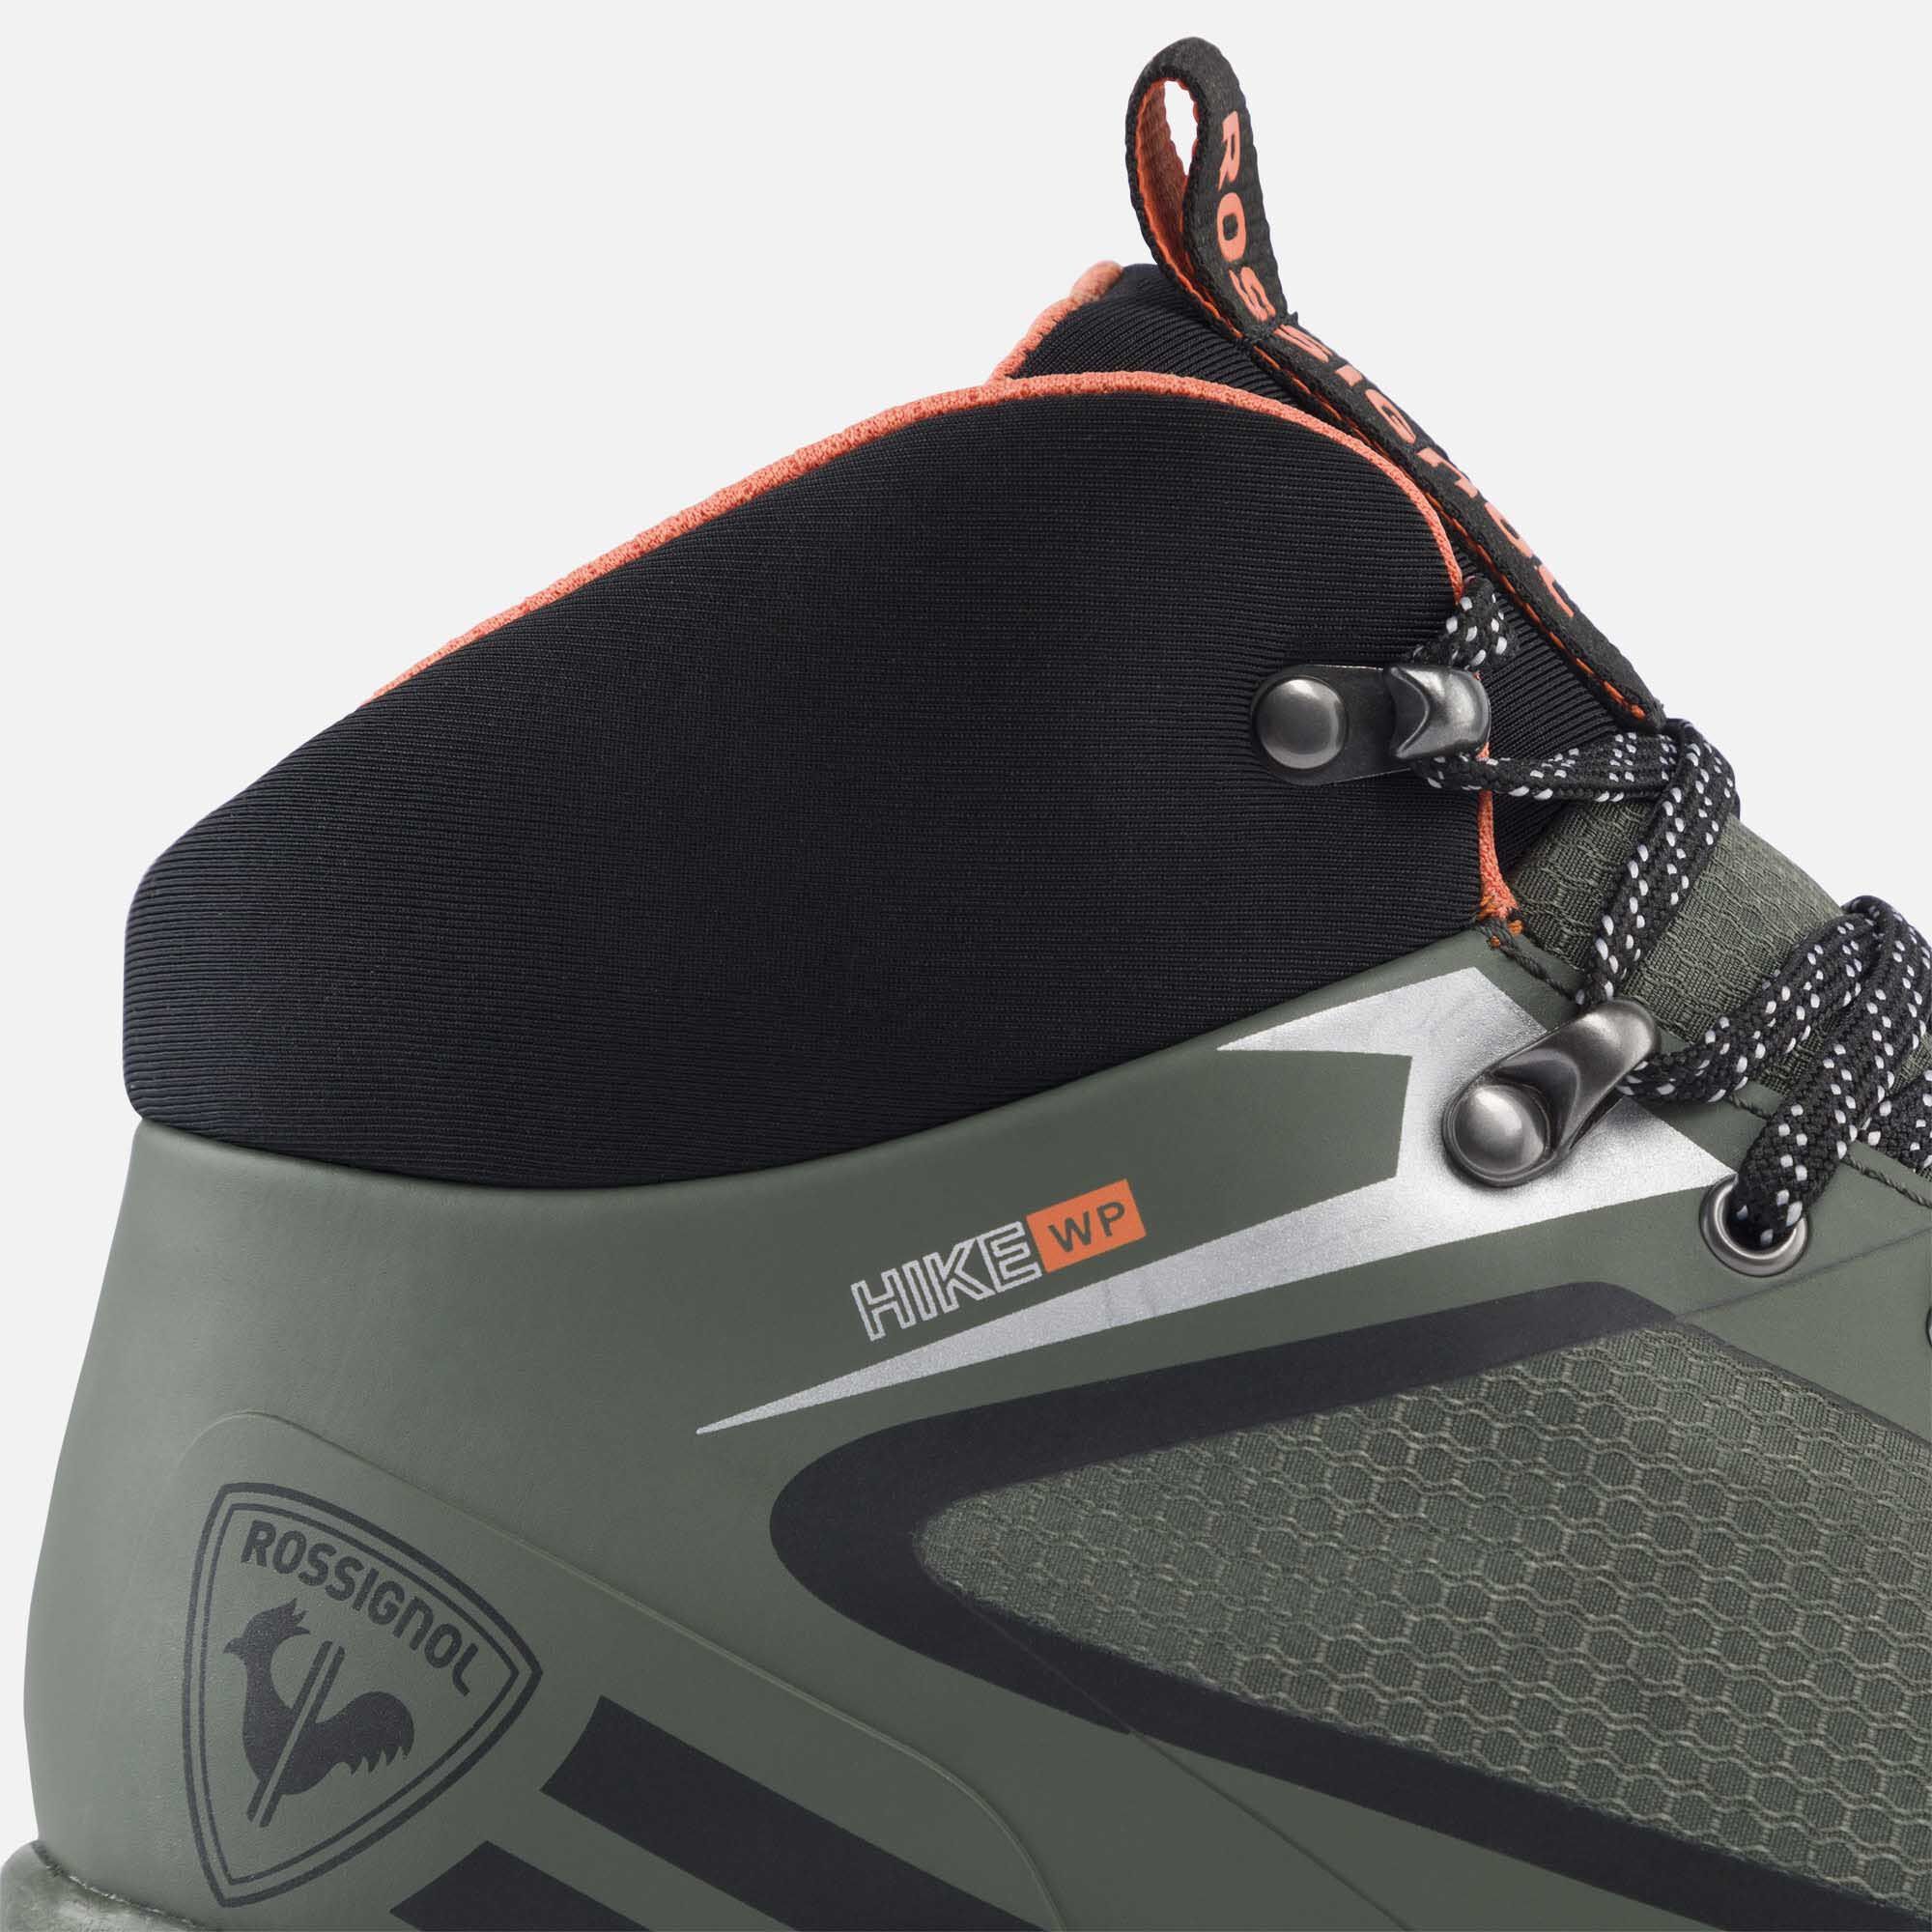 Men'S Green Waterproof Hiking Shoes | Green | Outdoor Shoes